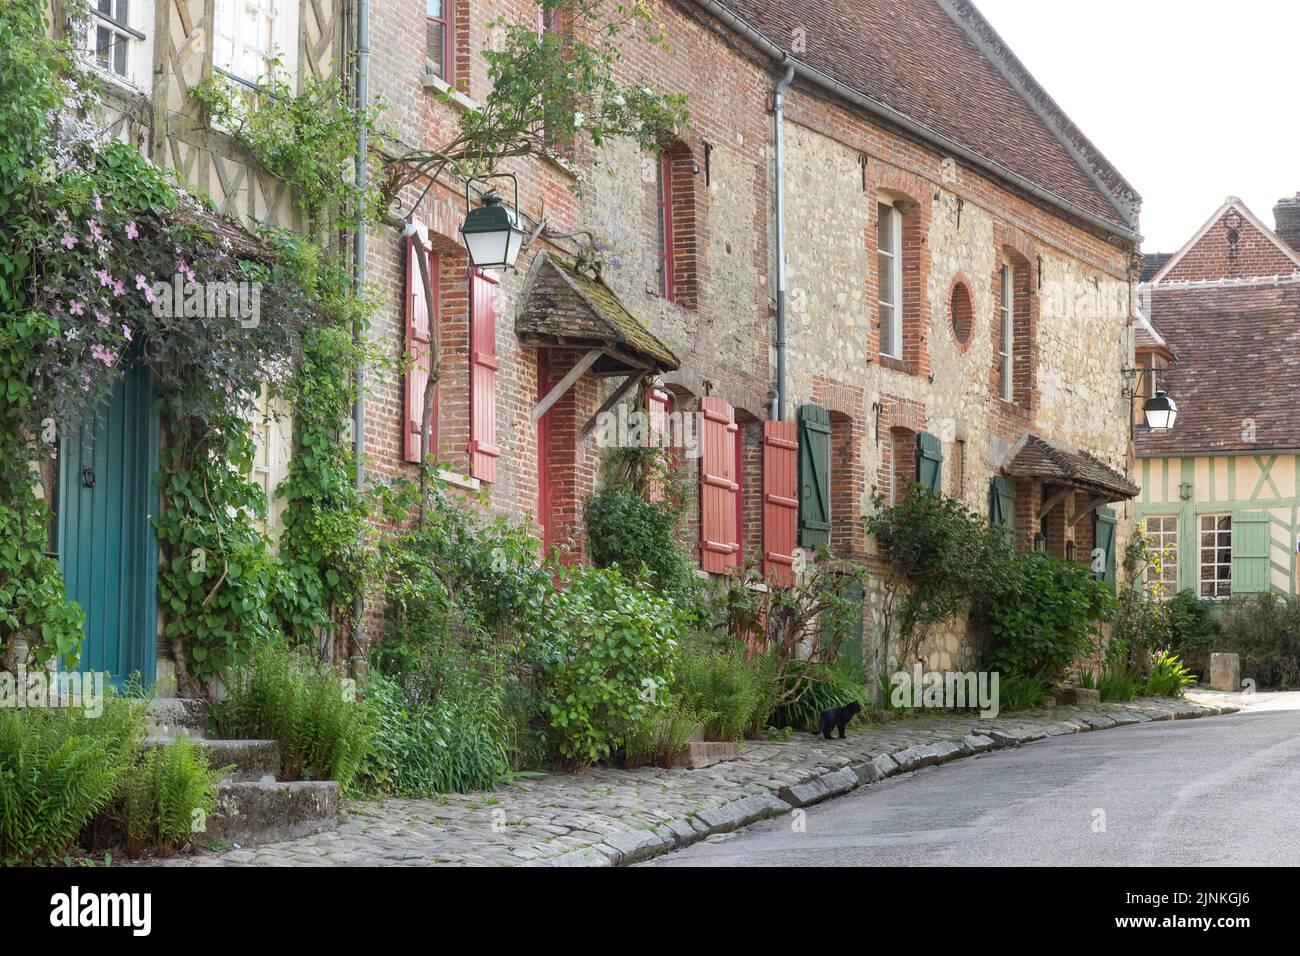 France, Oise, Picardie, Pays de Bray, Gerberoy, labelled Les Plus Beaux Villages de France (The Most Beautiful Villages of France), flowery street // Stock Photo